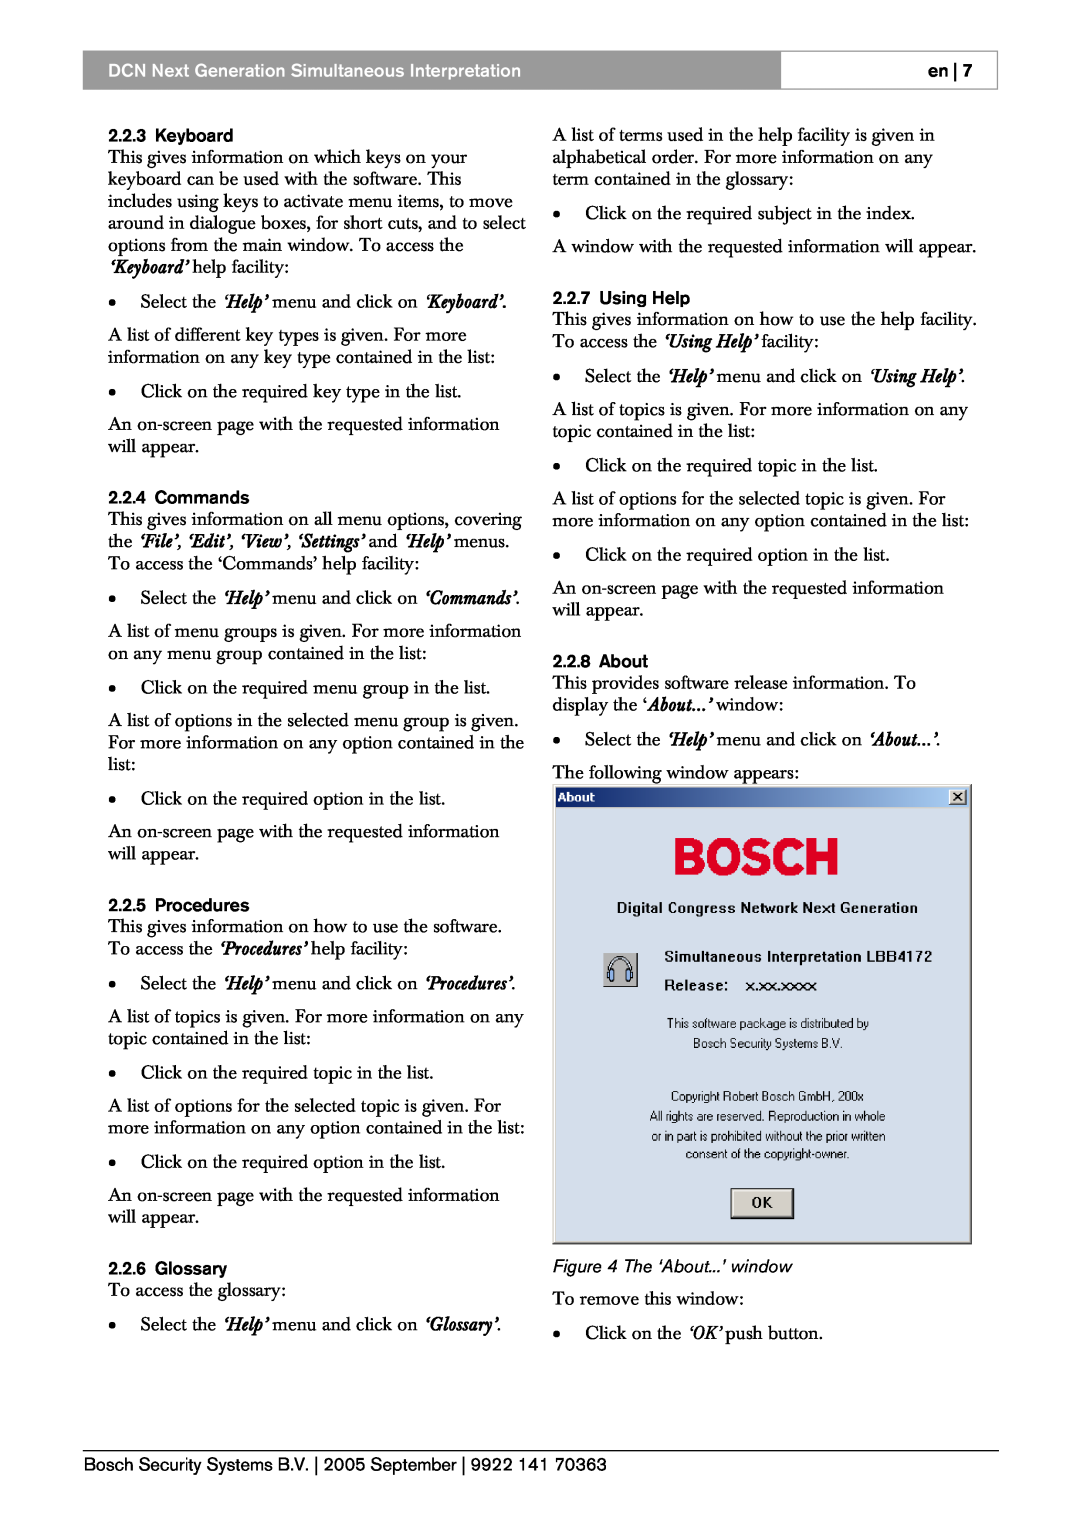 Bosch Appliances LBB 4172 DCN Next Generation Simultaneous Interpretation, Select the ‘Help’ menu and click on ‘Keyboard’ 